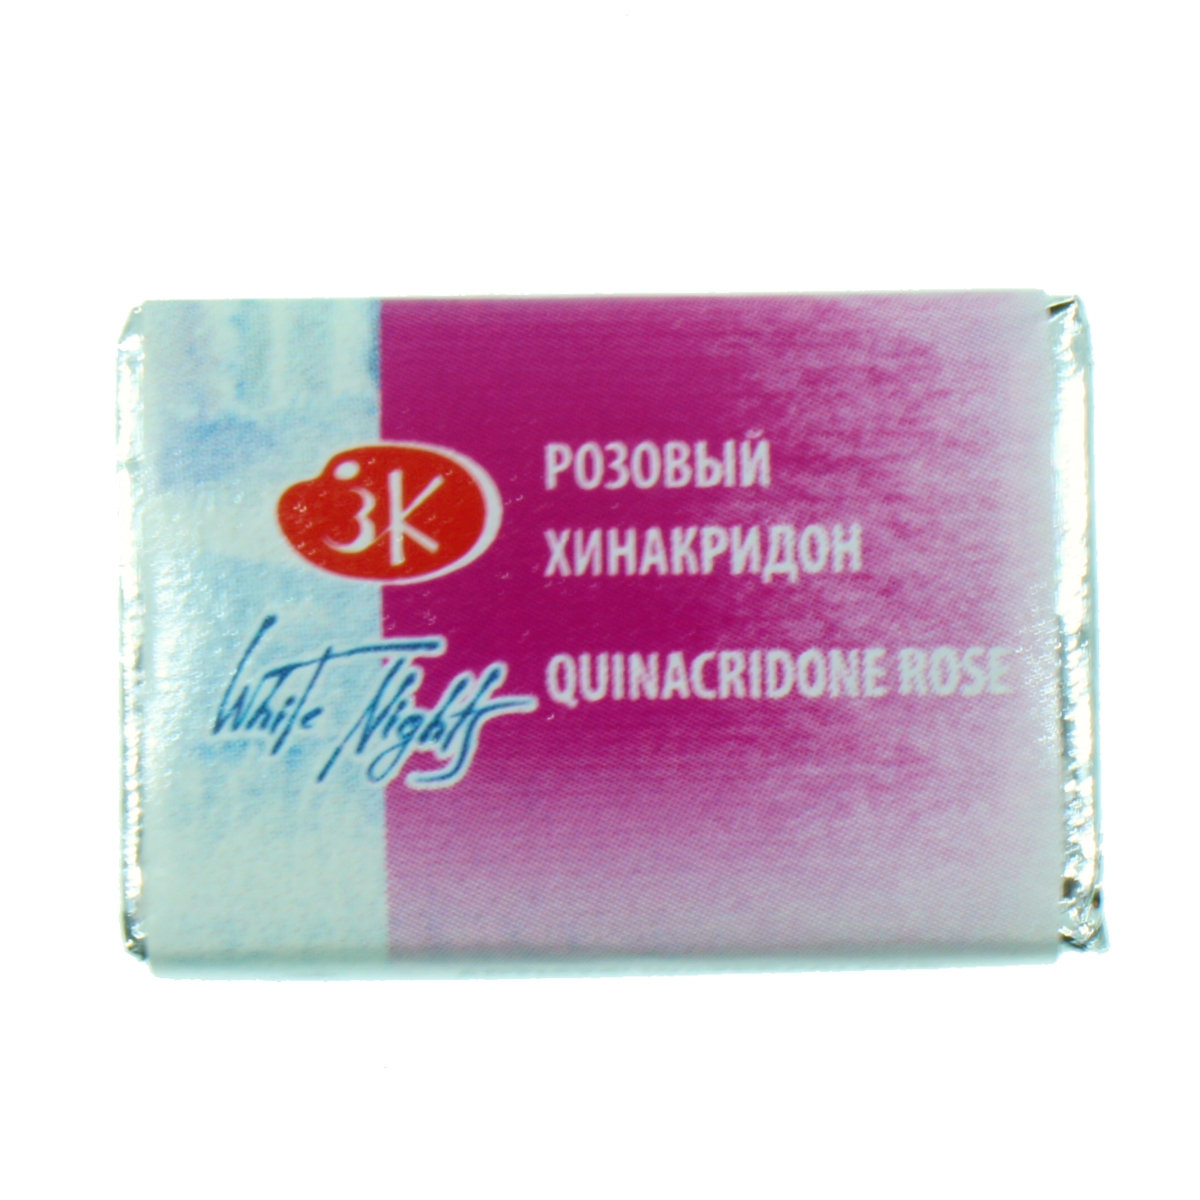 Acuarela ruseasca White Night pastila 2 5ml Nevskaya Palitra roz chinacridona 324